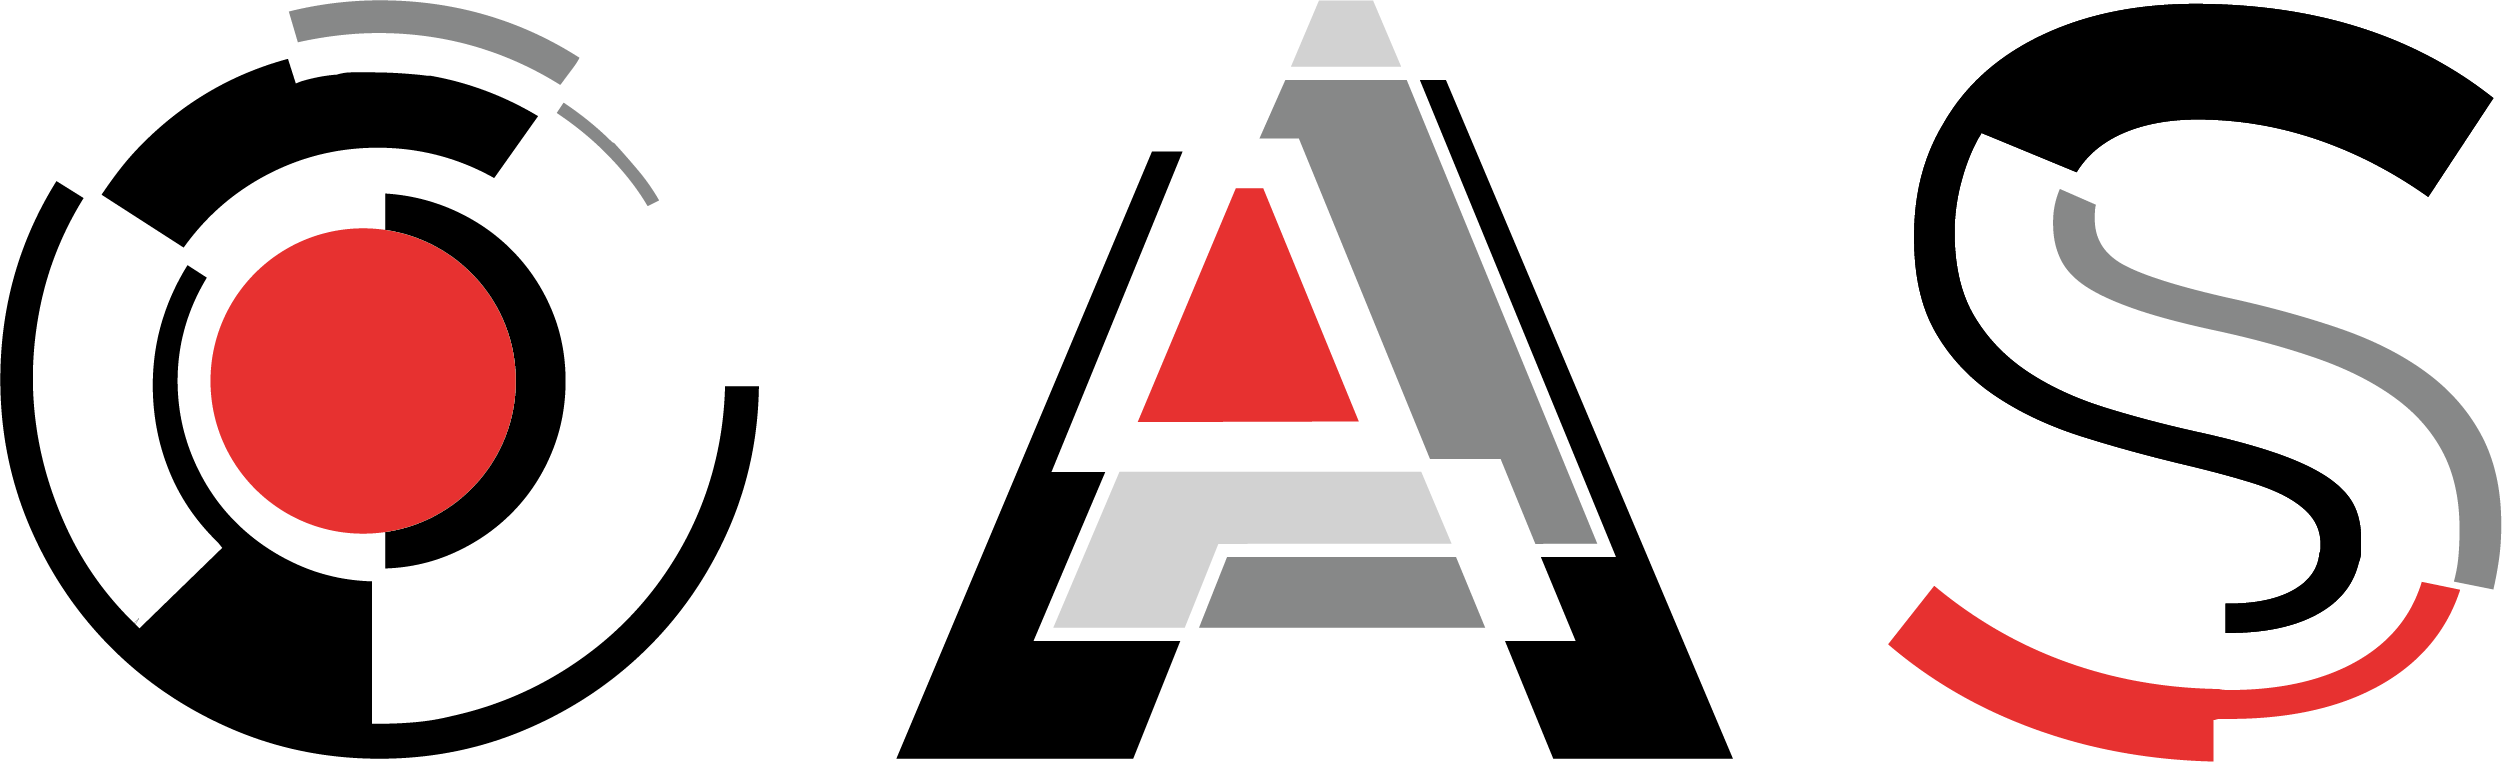 Oxfordshire Advanced Skills logo